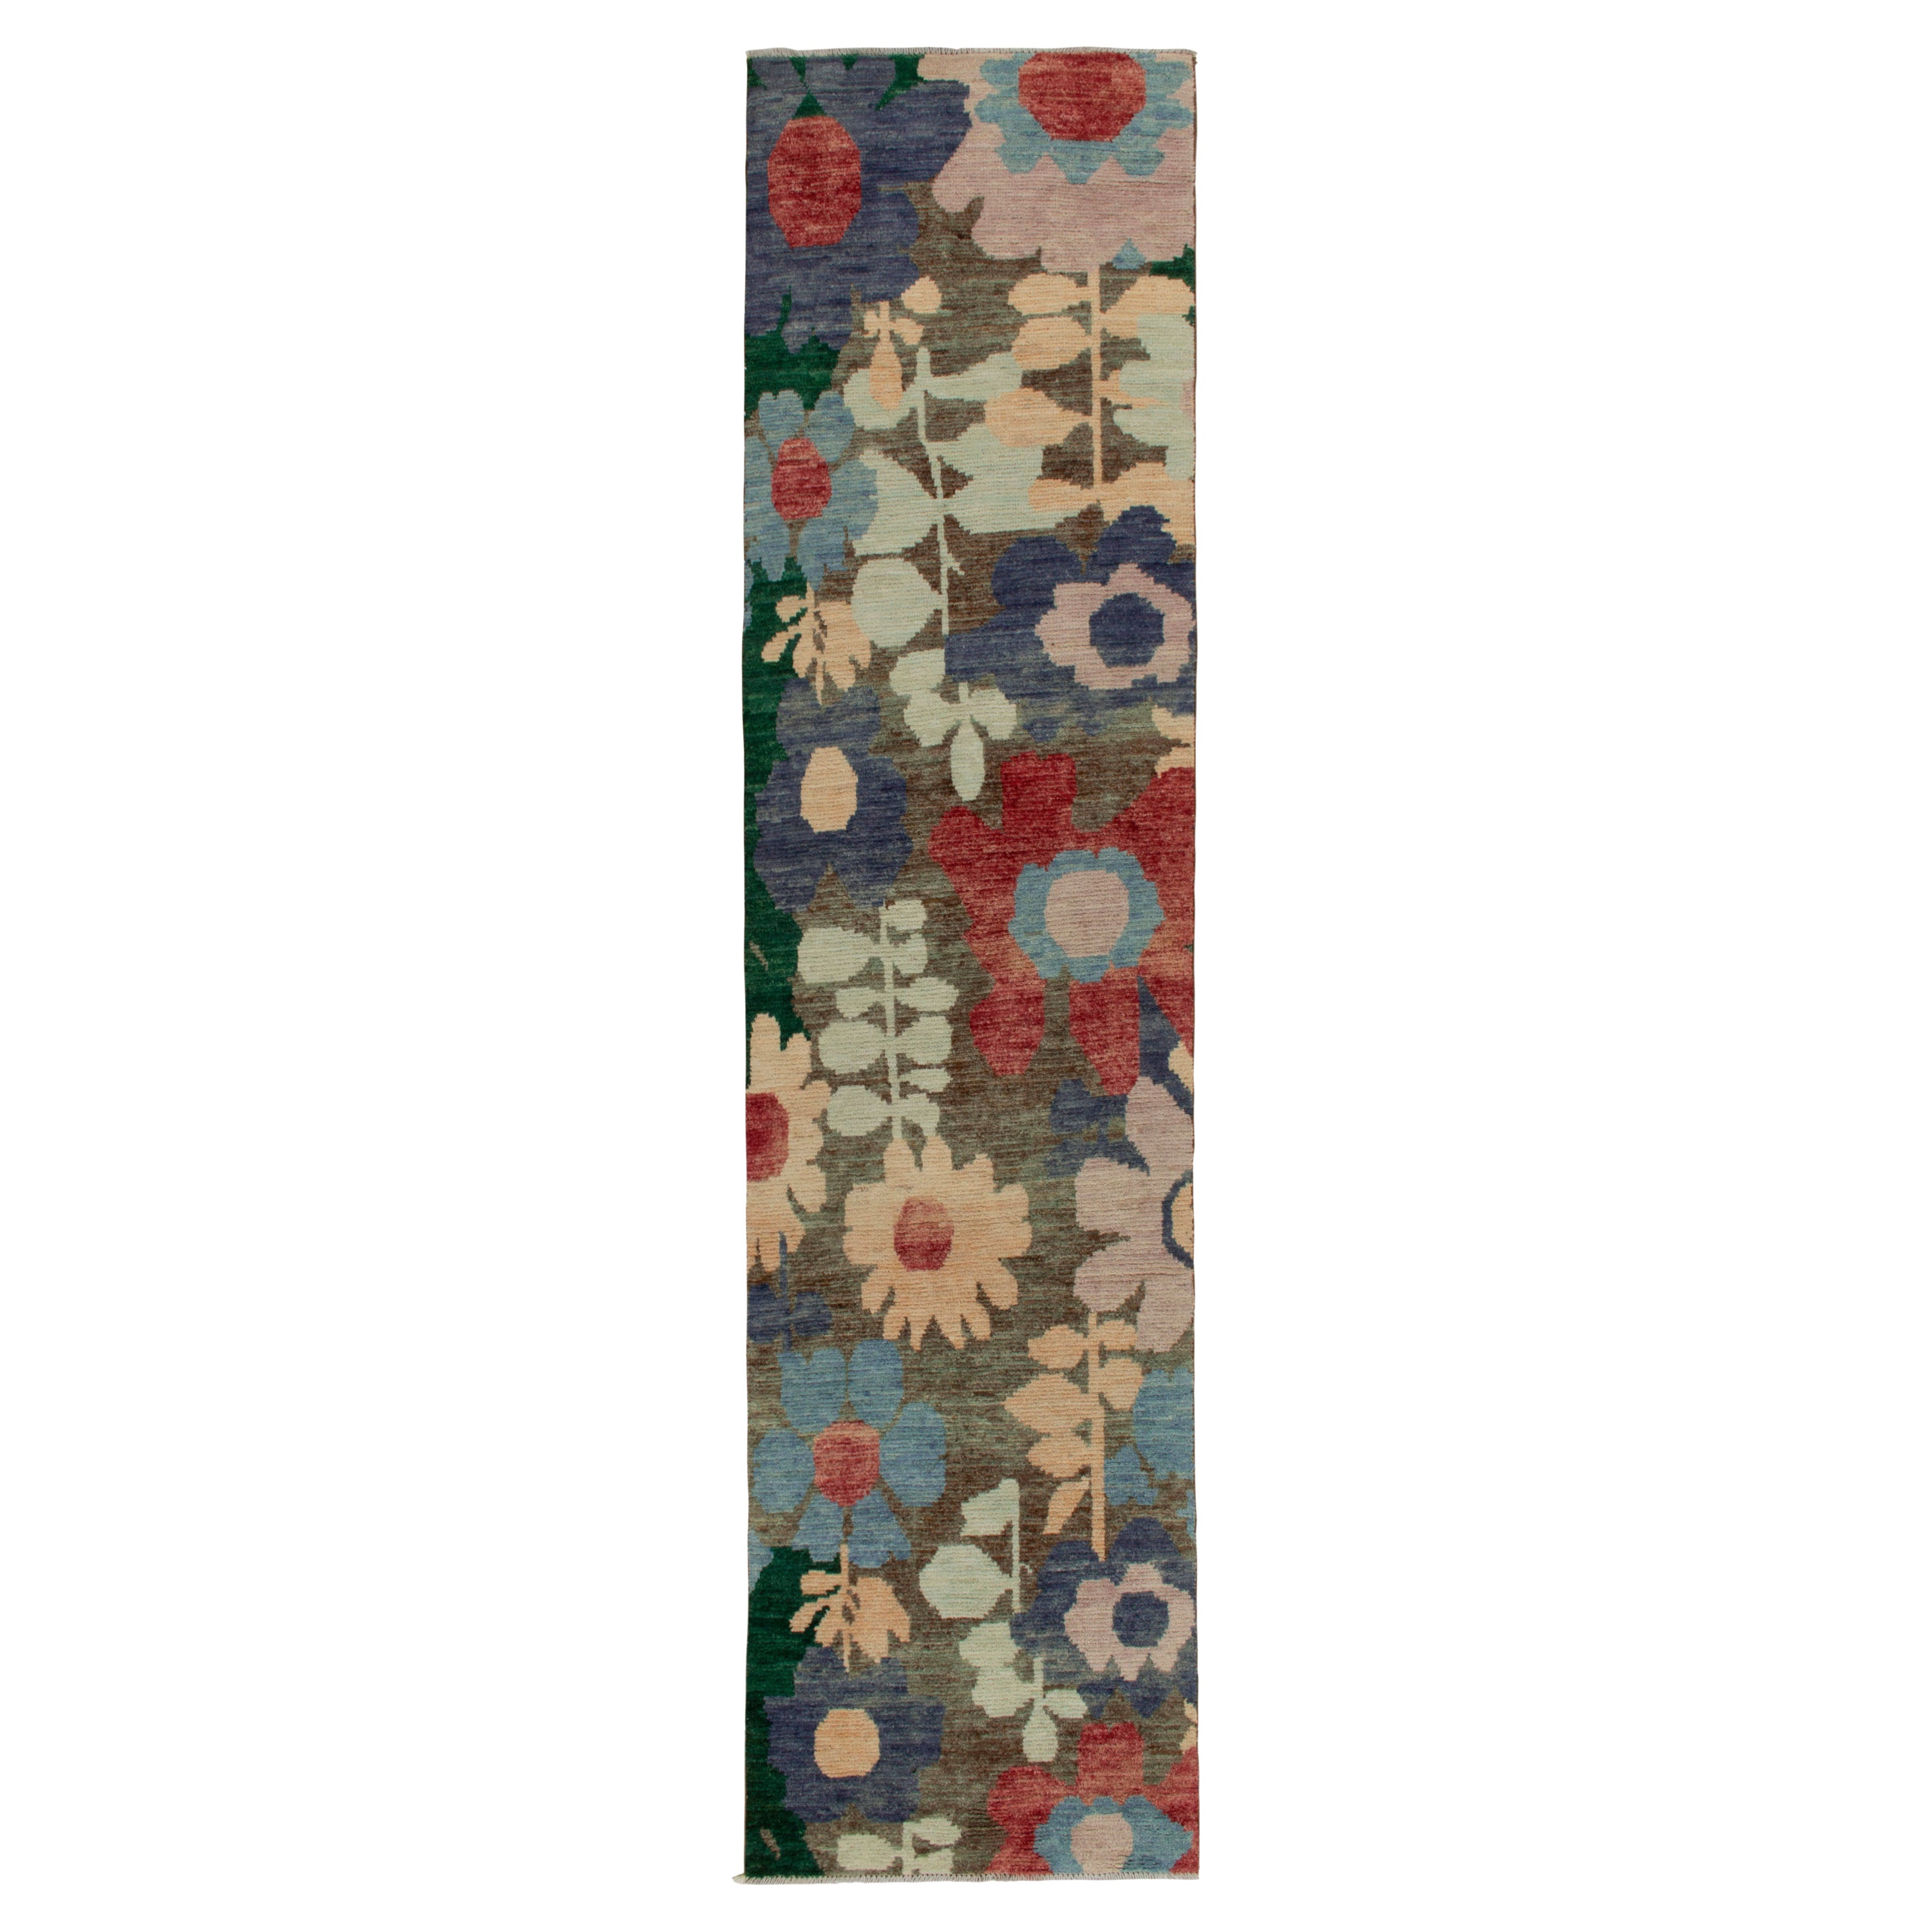 Tapis de course contemporain de Rug & Kilim en motif floral multicolore